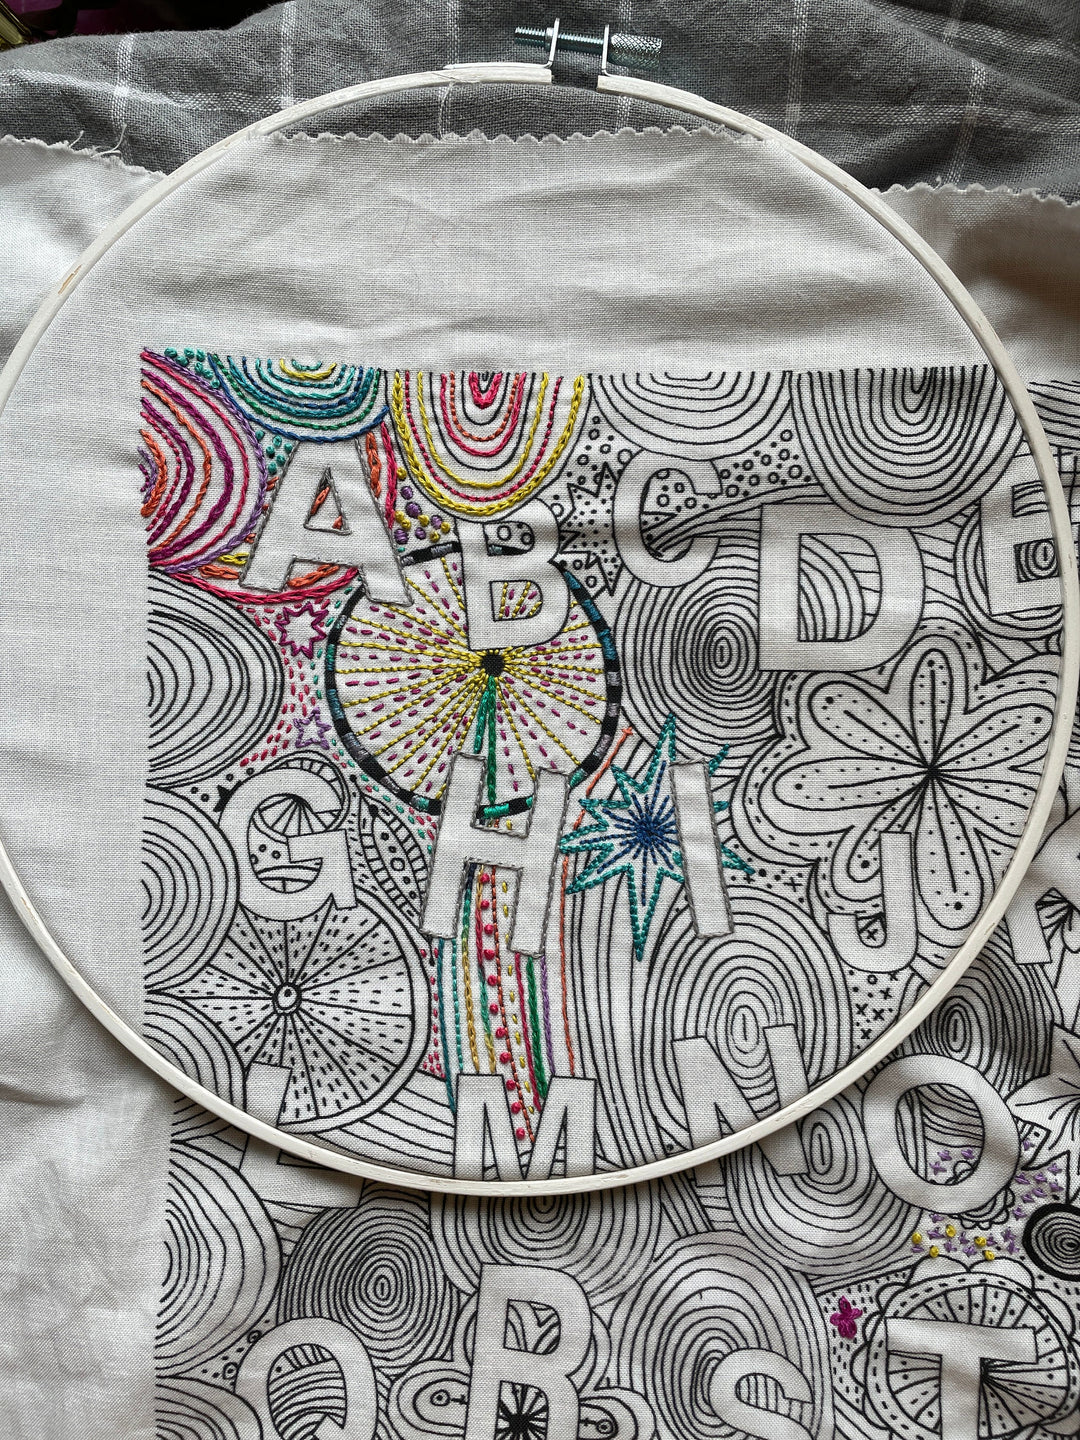 ABC Max Dropcloth embroidery sampler preprinted